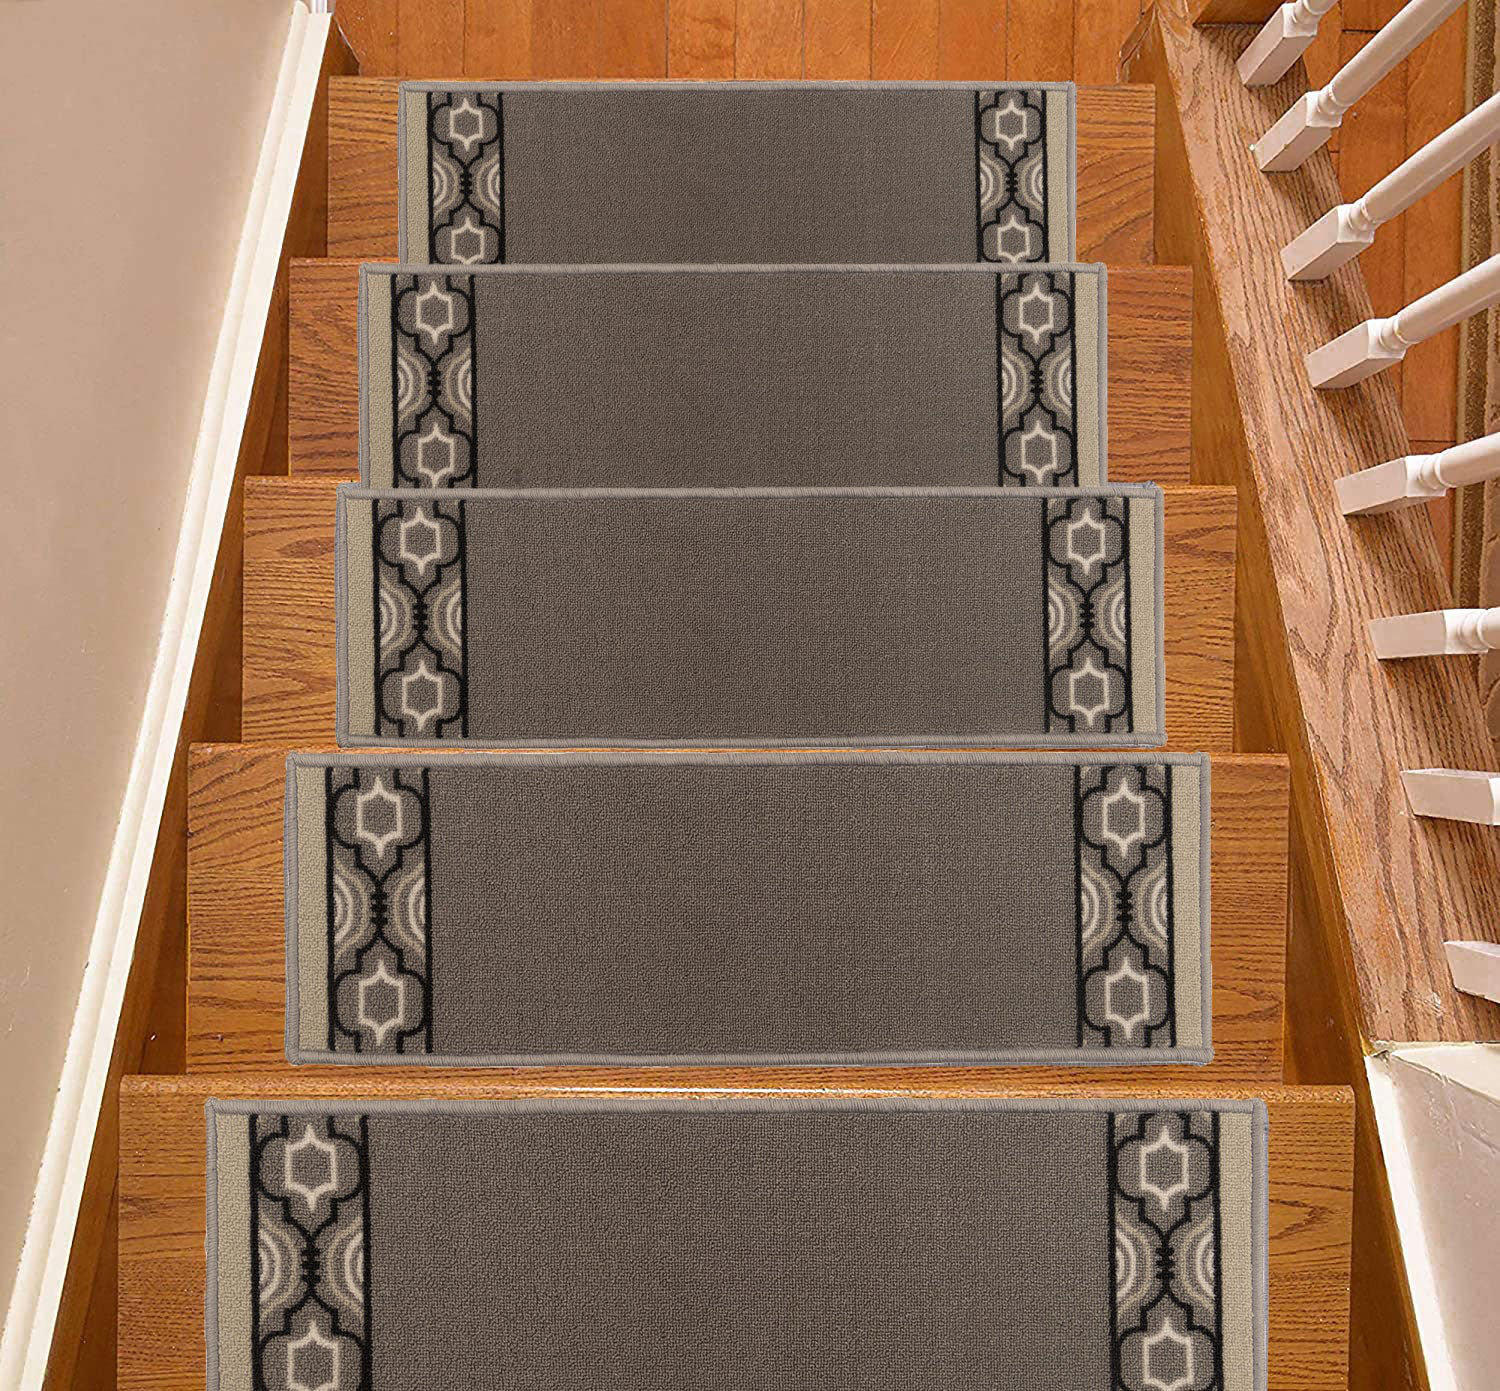 Canora Grey Non-Slip Black Stair Treads, Wayfair